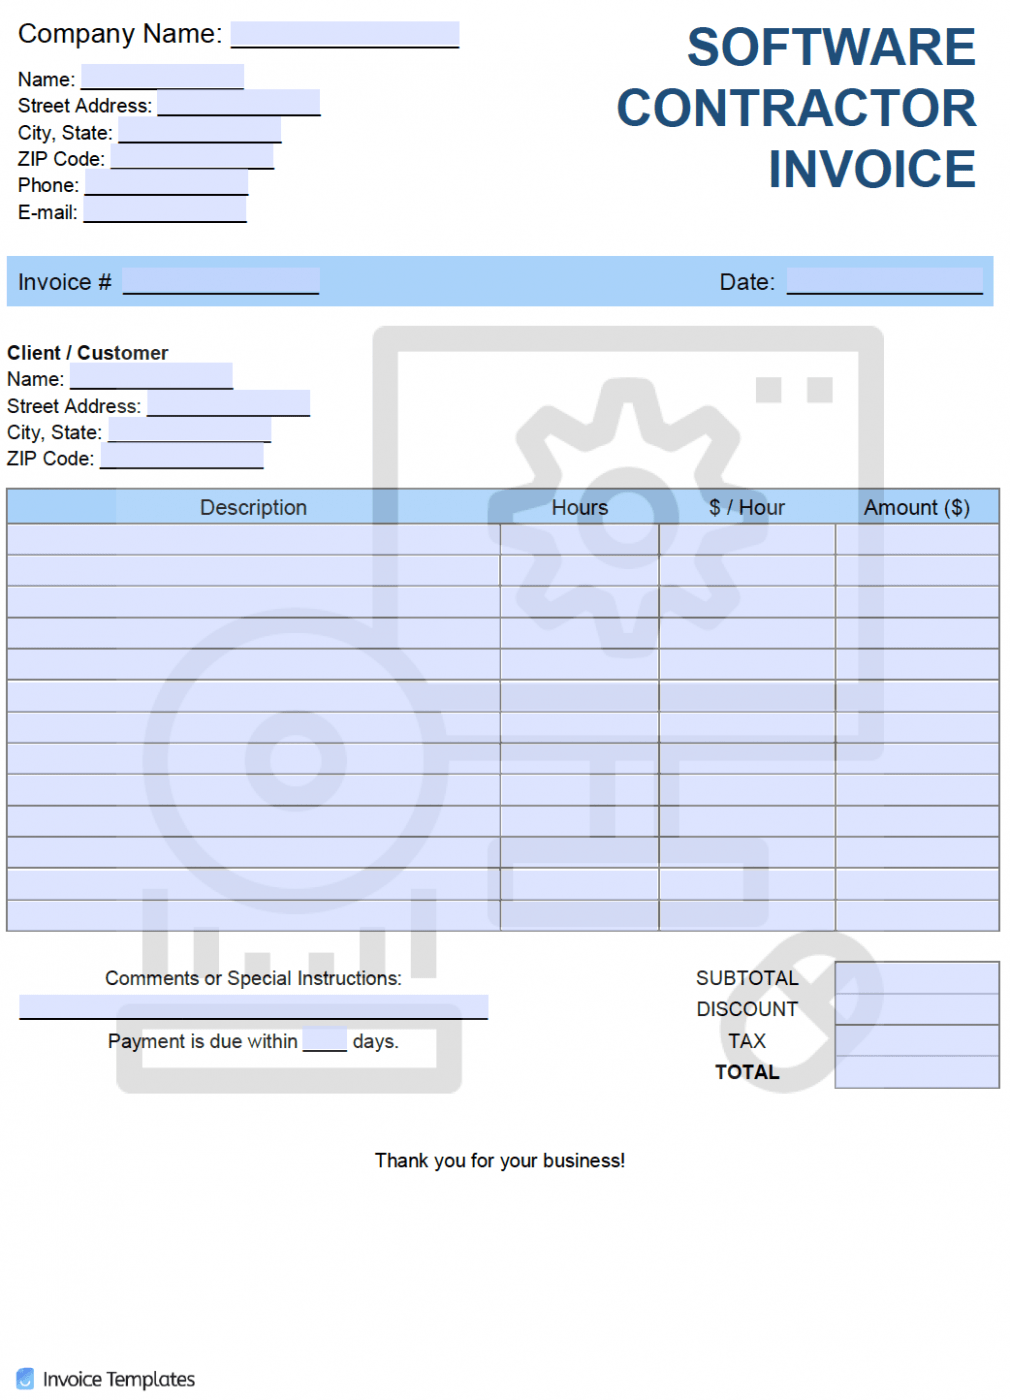 Editable Software Contractor Invoice Template PDF